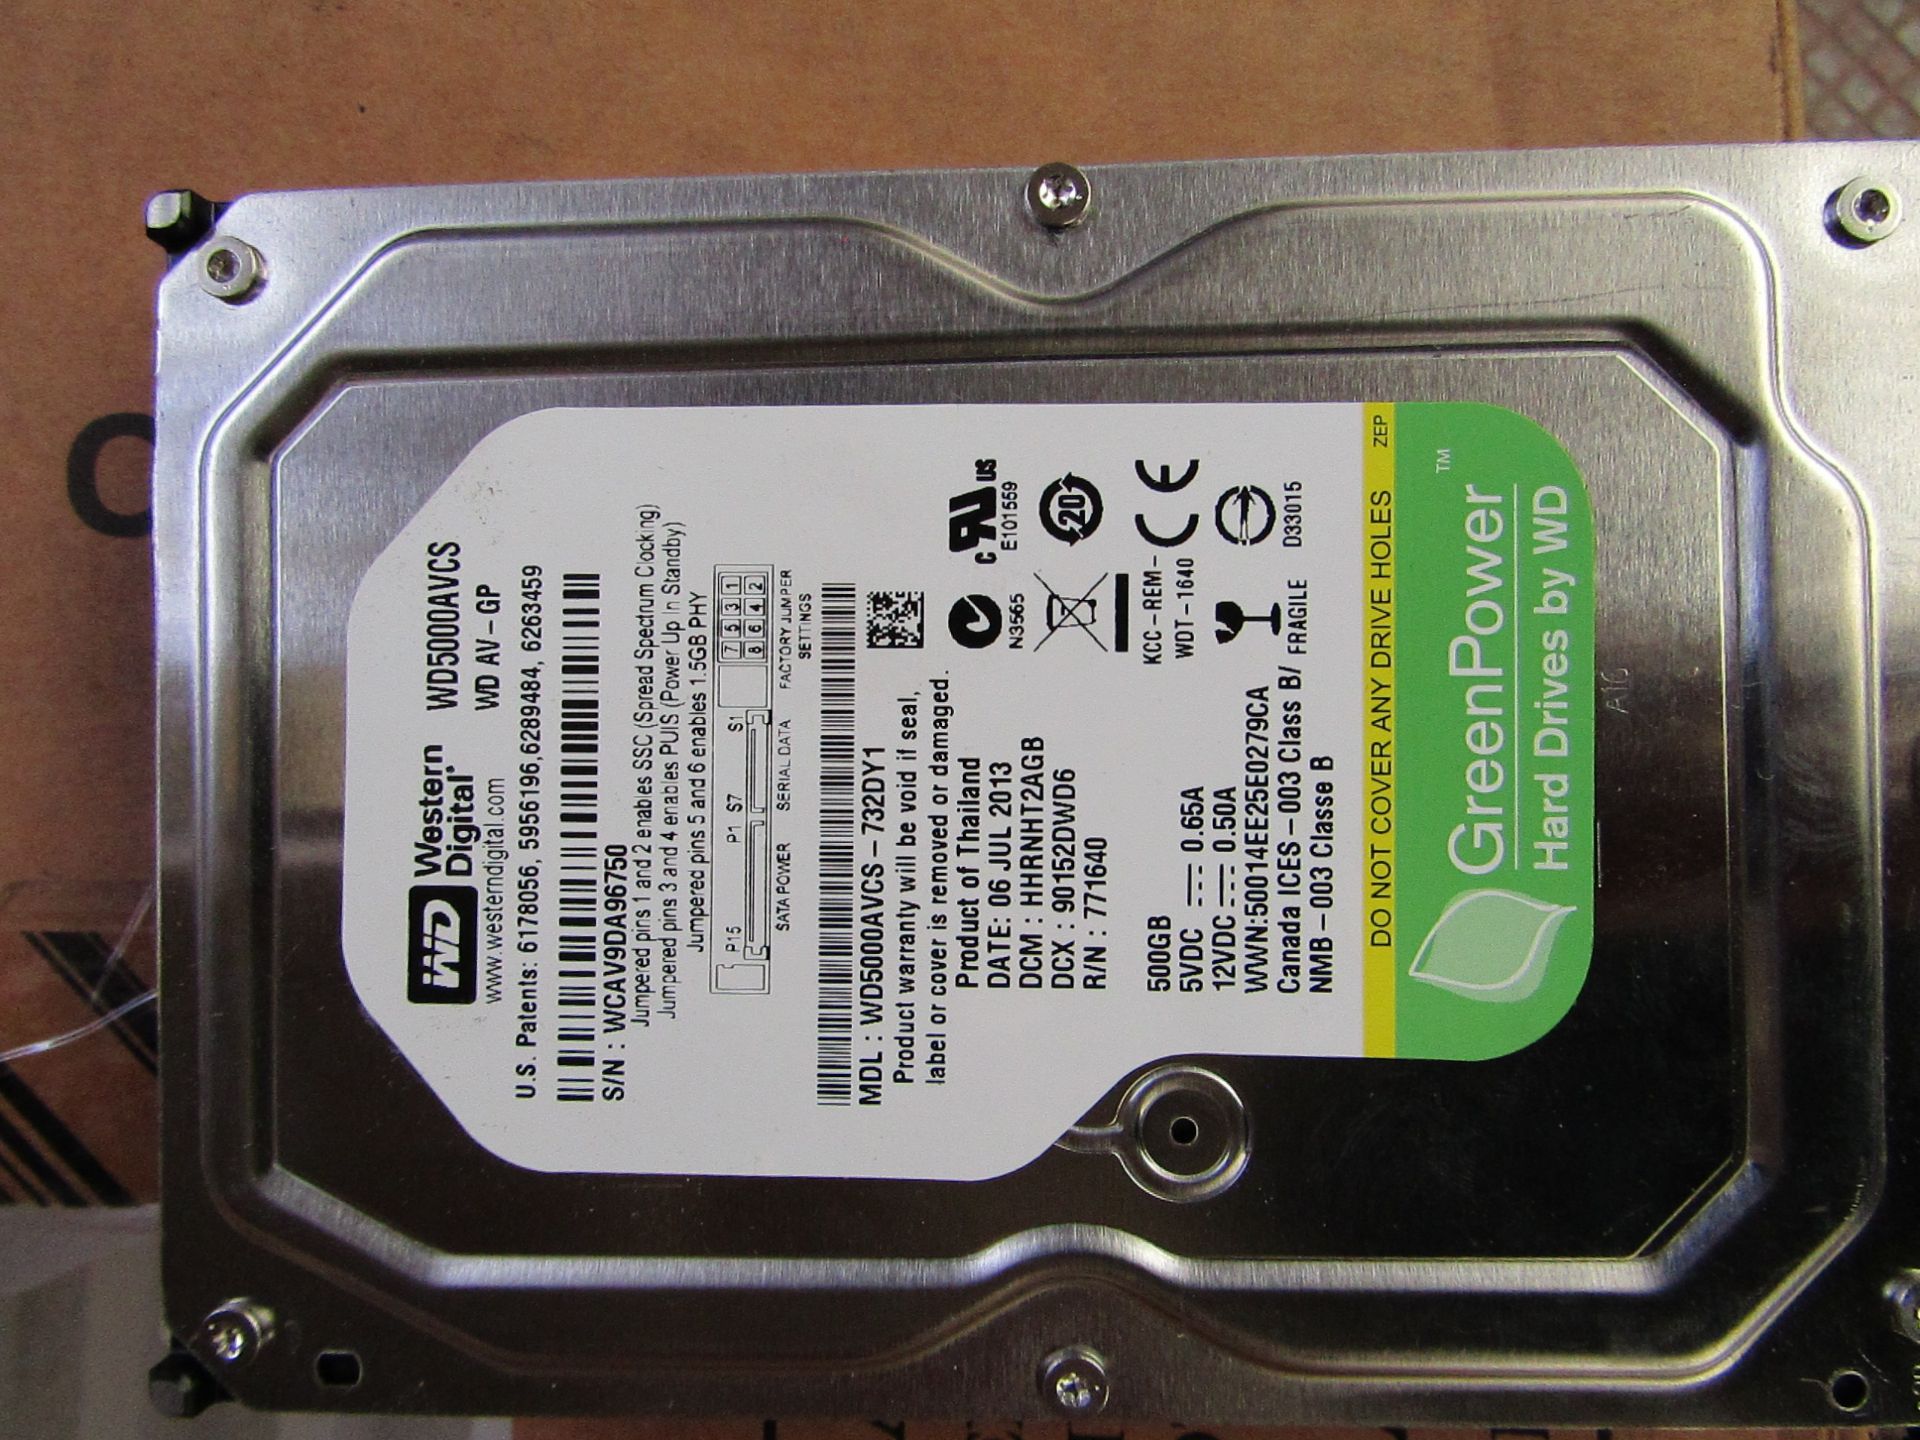 Western Digital 500GB hard drive, new